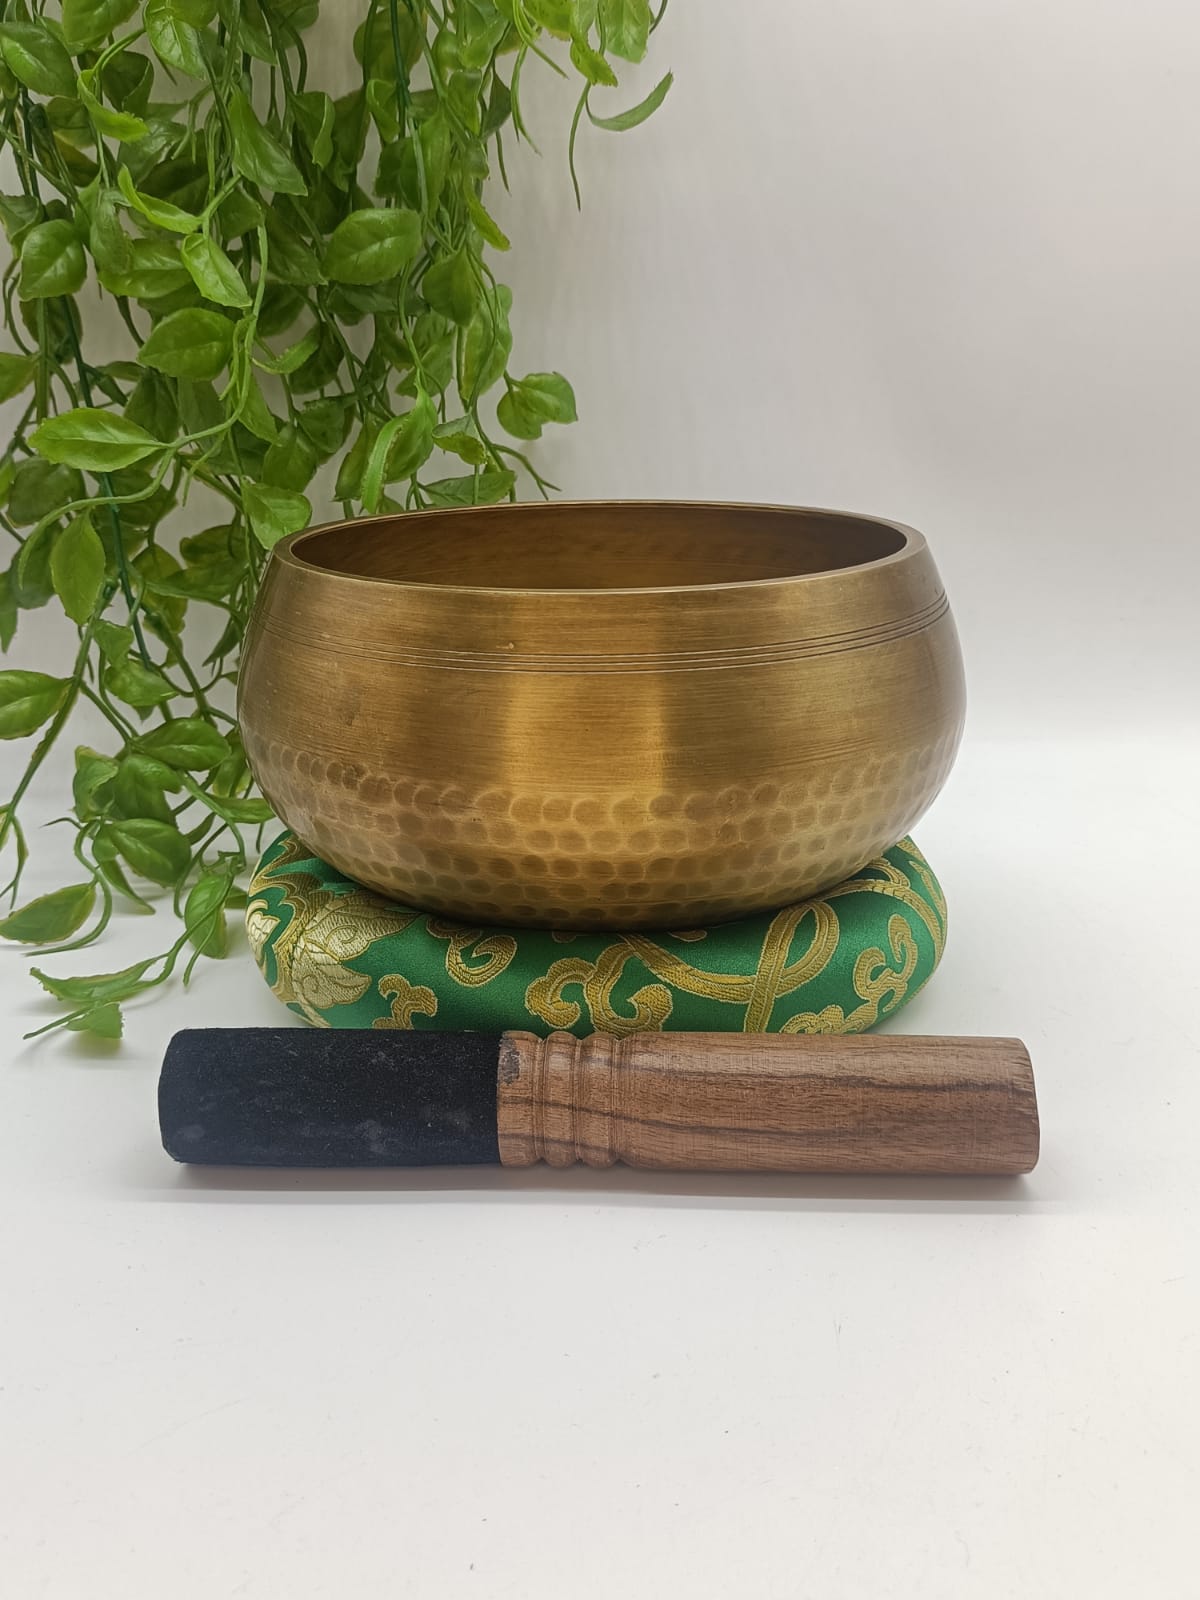 Tibetan Sound Healing Bowl 6.5 Inch E Note - Solar Plexus

